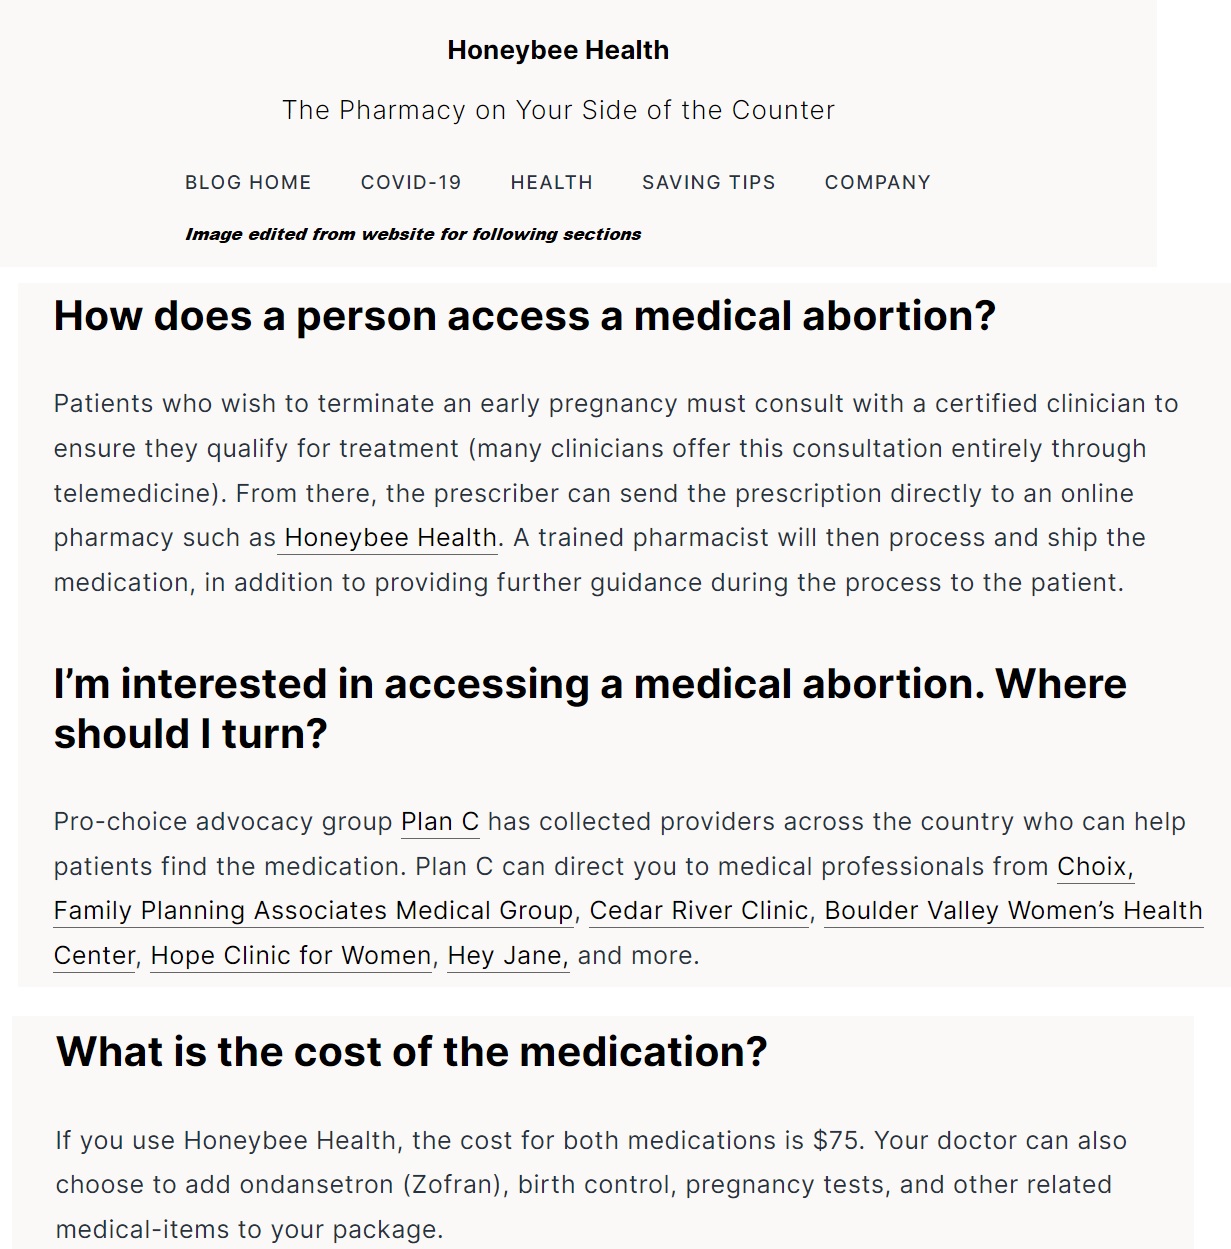 Image: HoneyBee Health pharmacy promoting abortion pills online